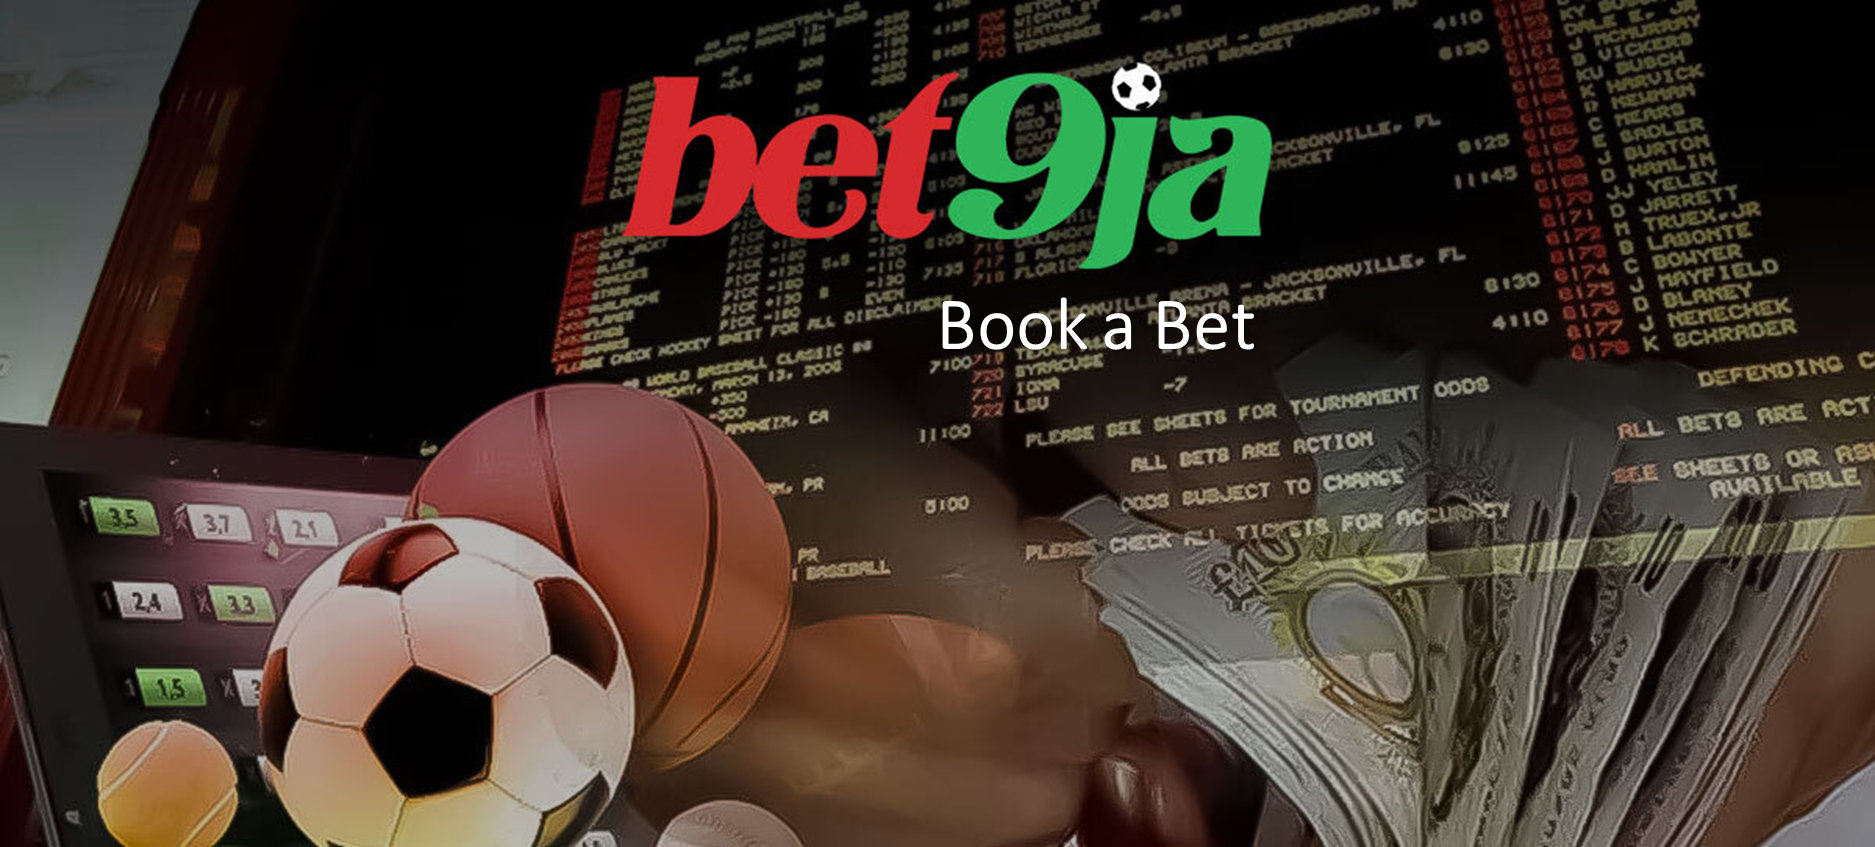 Bet9ja booking